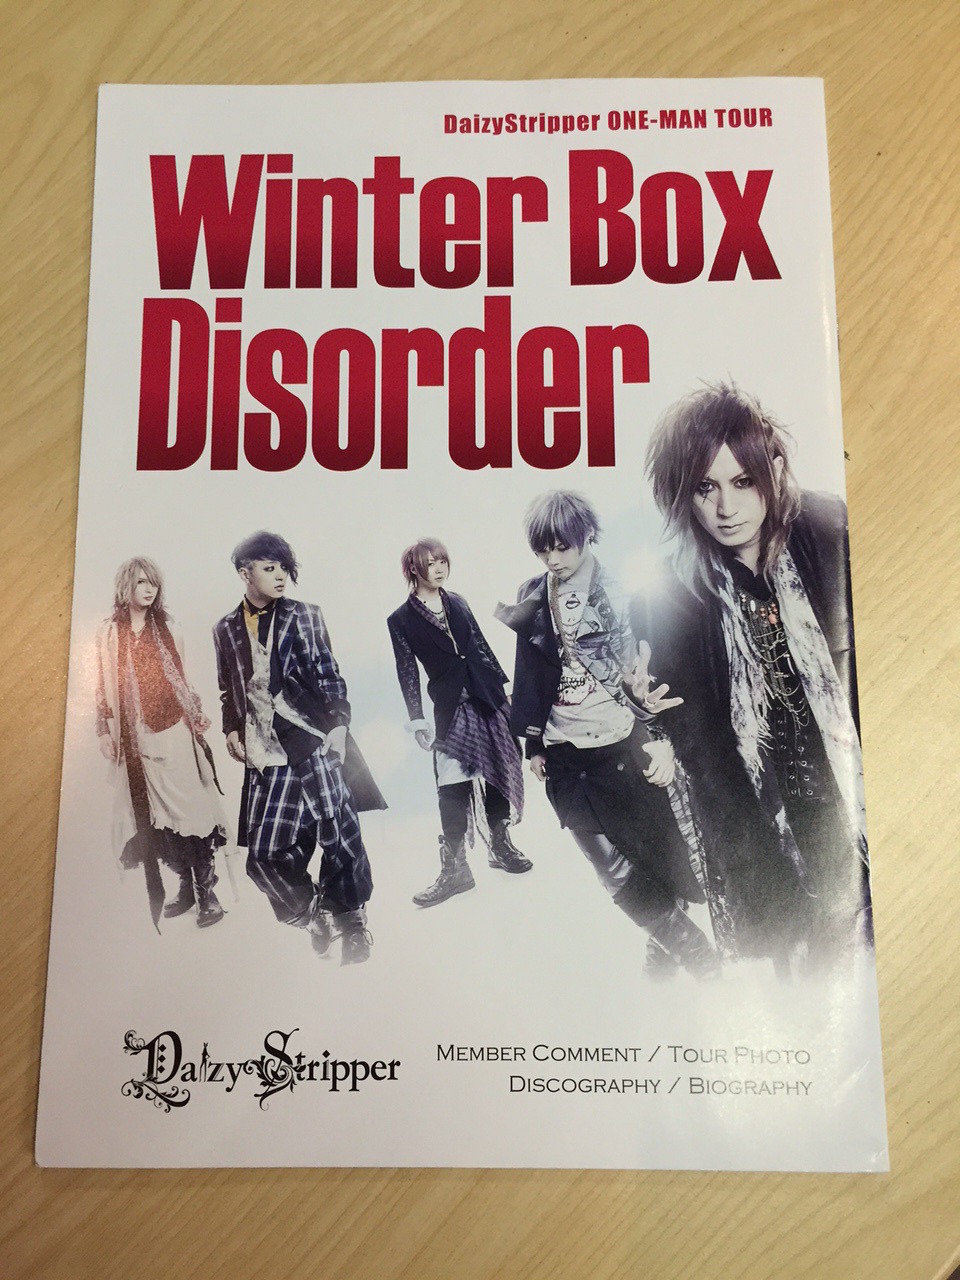 “Winter Box Disorder” ツアーパンフレット